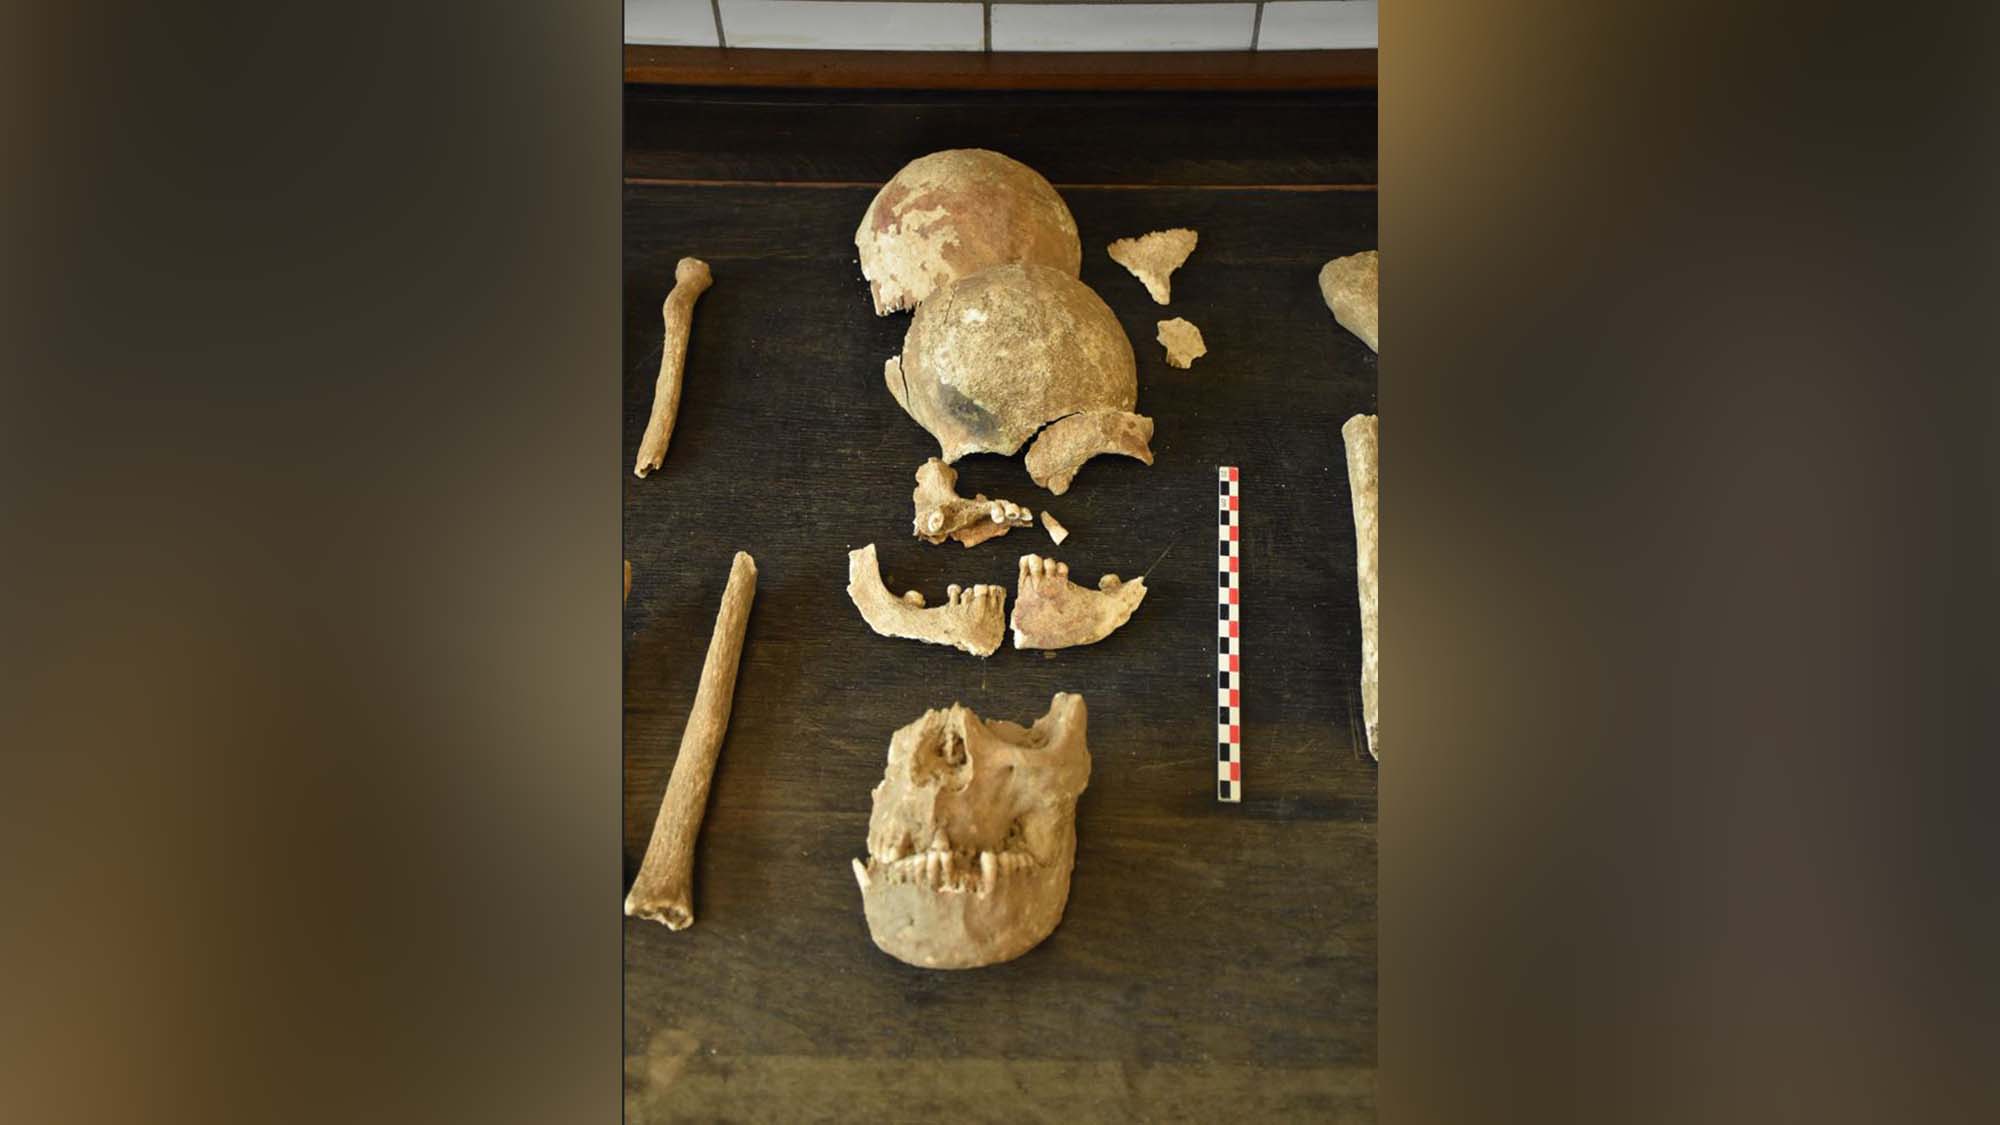 Battle Of Waterloo Skeletons Found In The Attic In Belgium